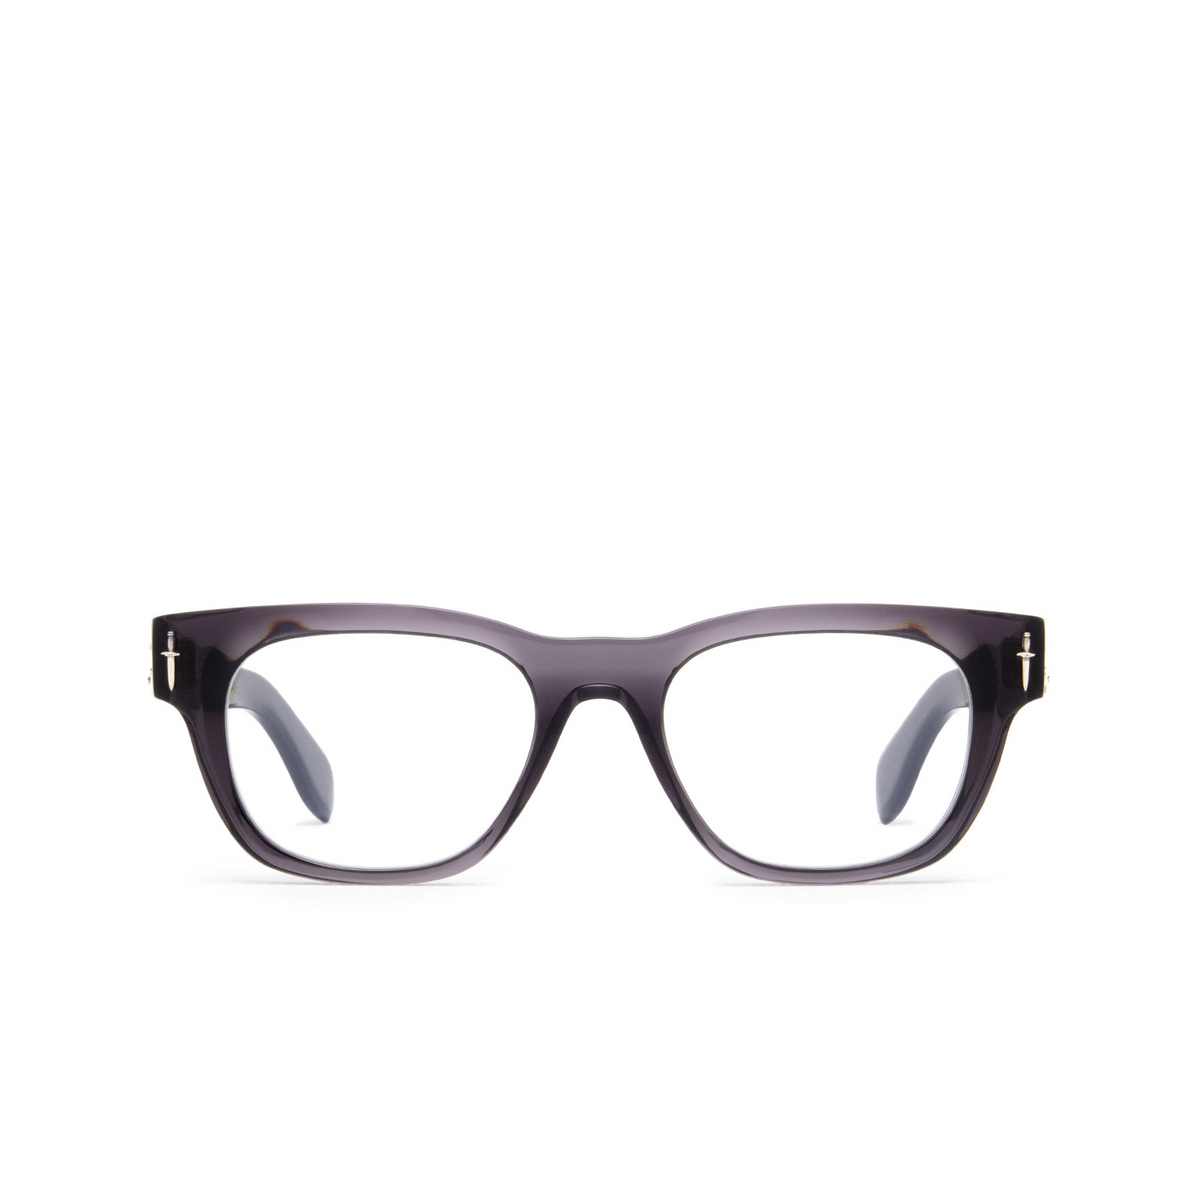 Cutler and Gross 003 Eyeglasses 03 Pewter Grey - 1/4